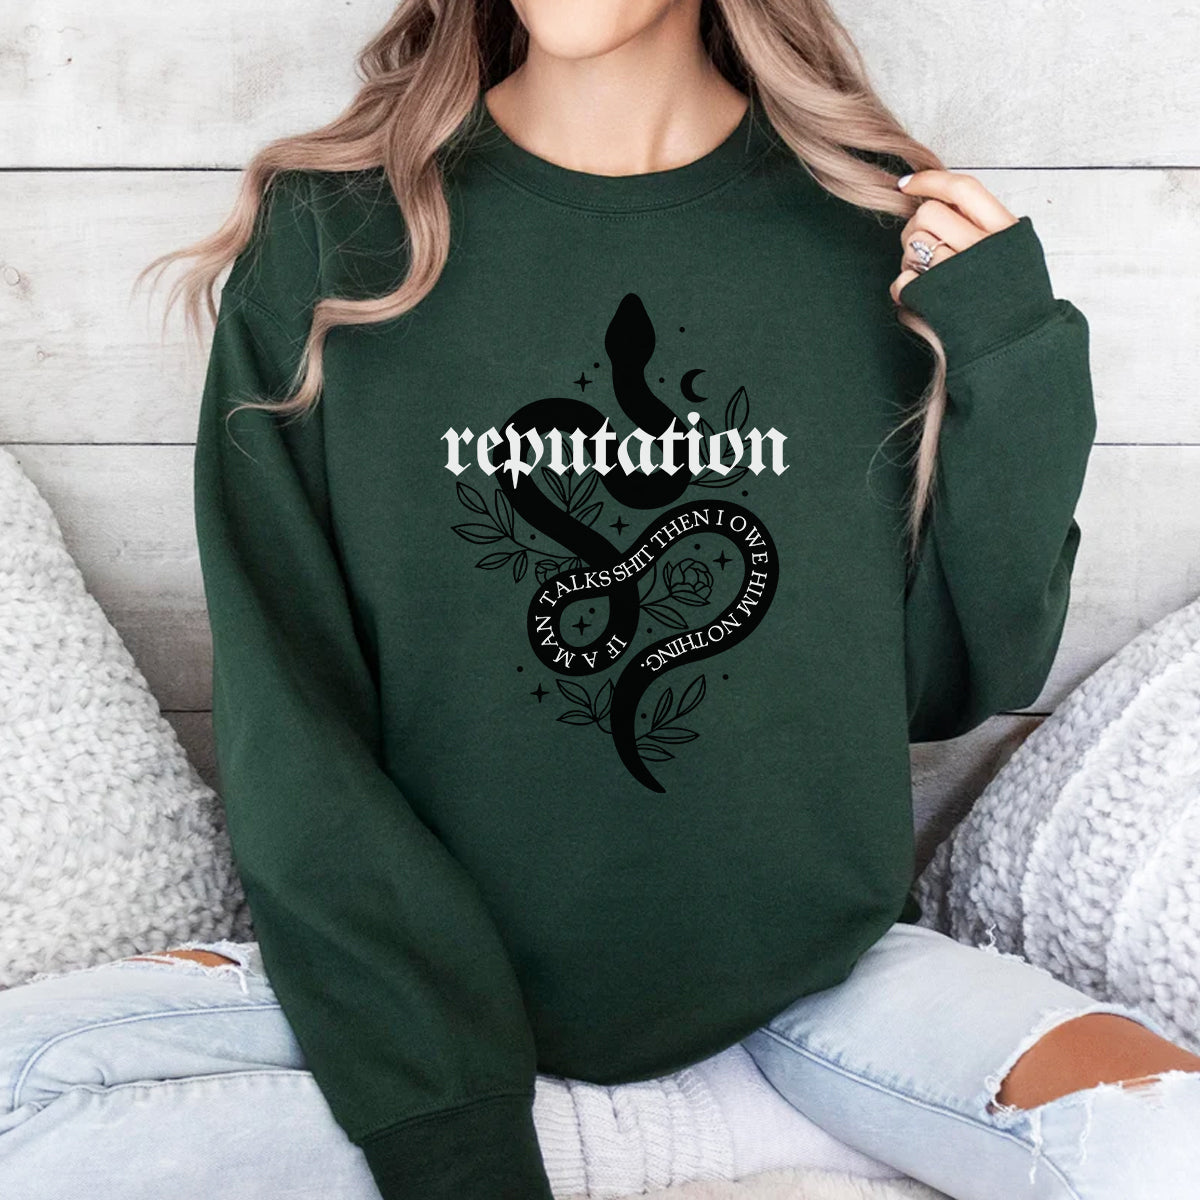 reputation snake era sweatshirt hoodie t shirt 1704268253064.jpg